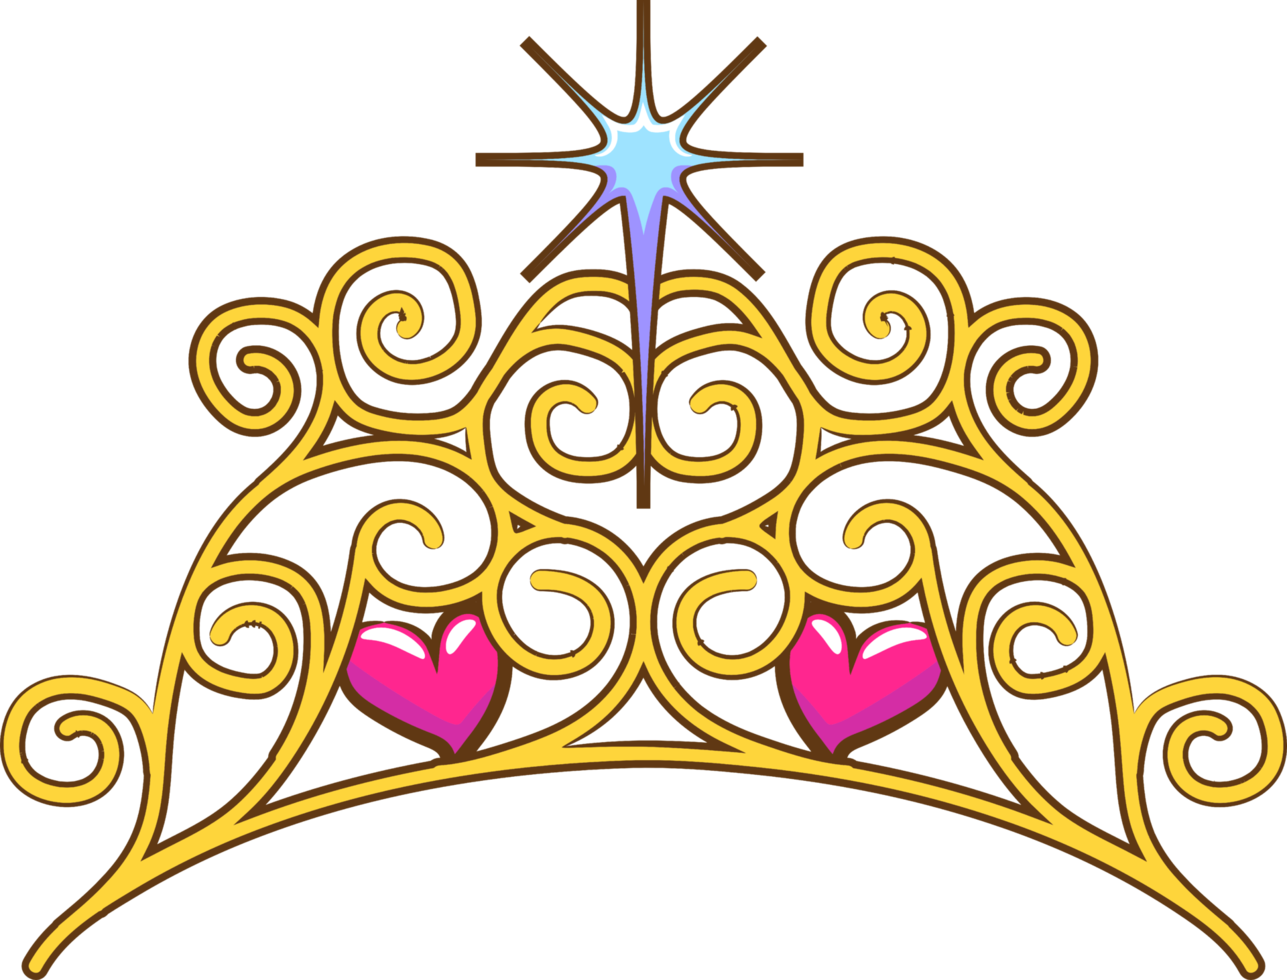 Princess crown png graphic clipart design